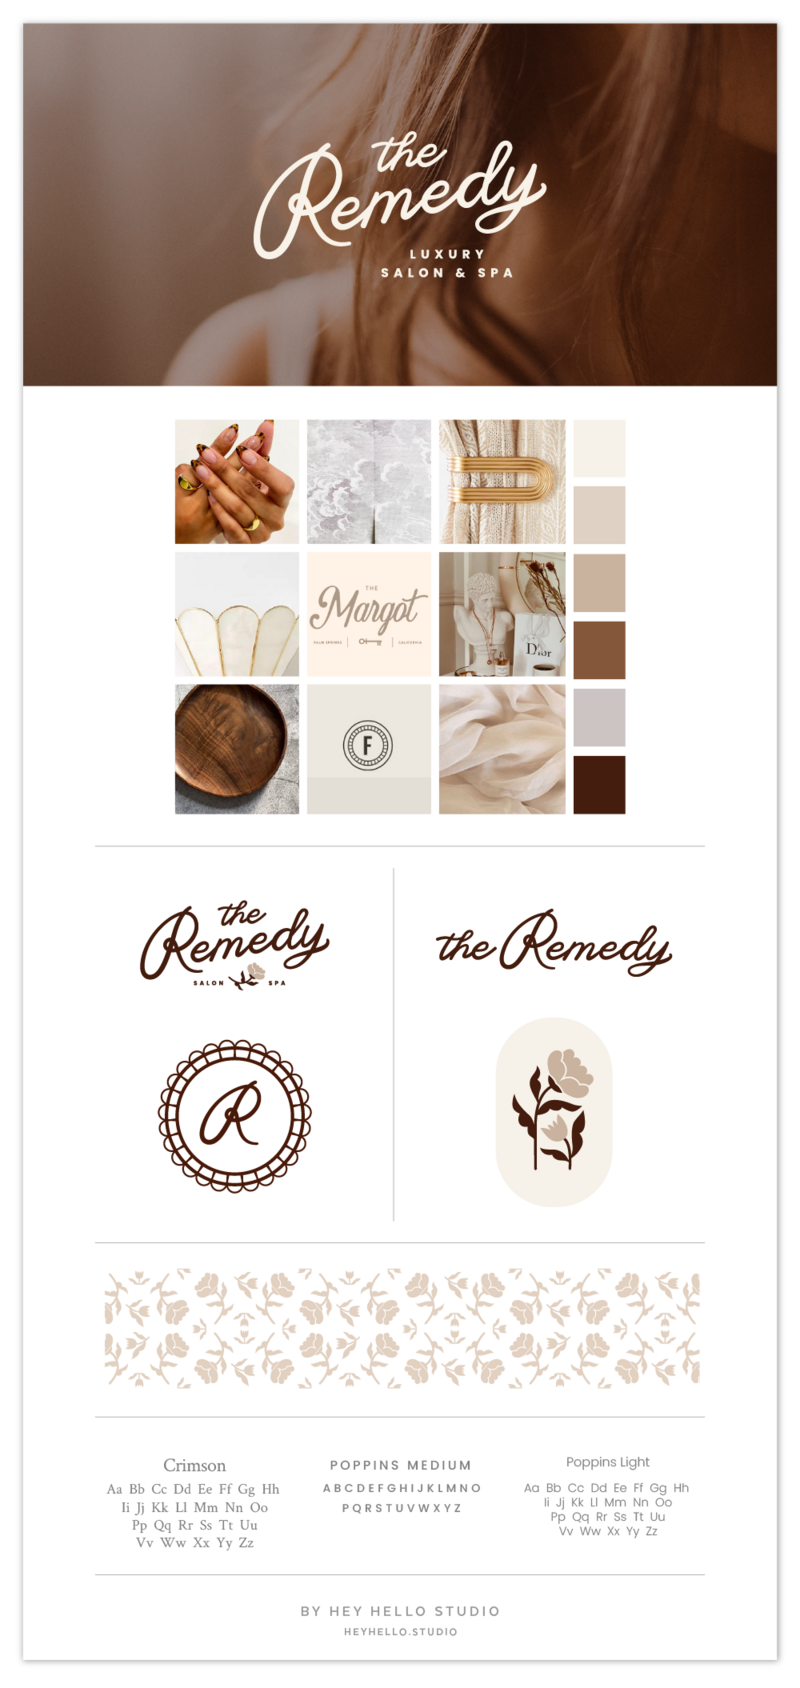 The Remedy Luxury Salon & Spa Brand Board by Hey Hello Studio